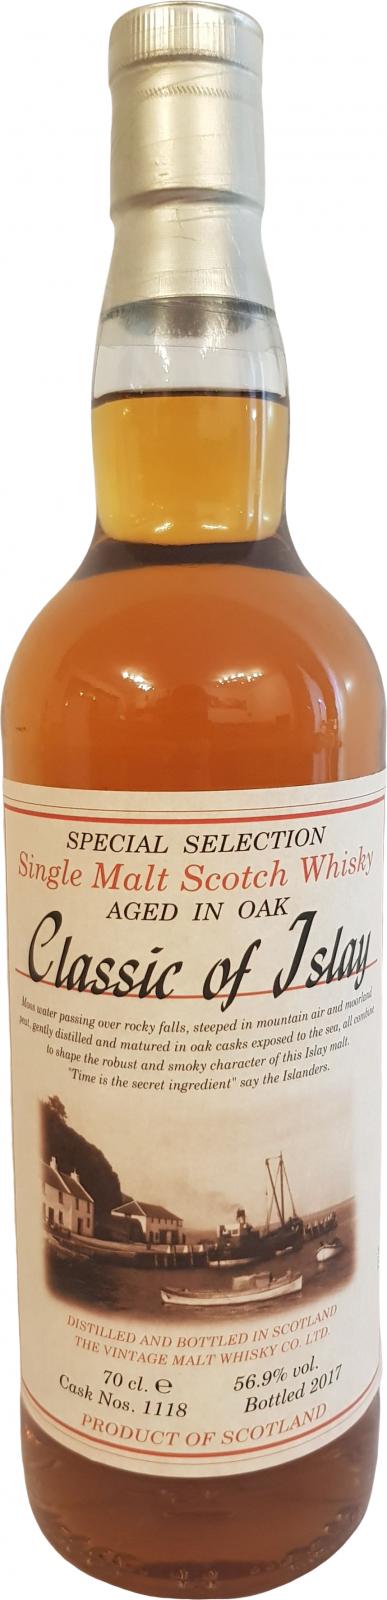 Classic of Islay Vintage 2017 JW #1118 56.9% 700ml